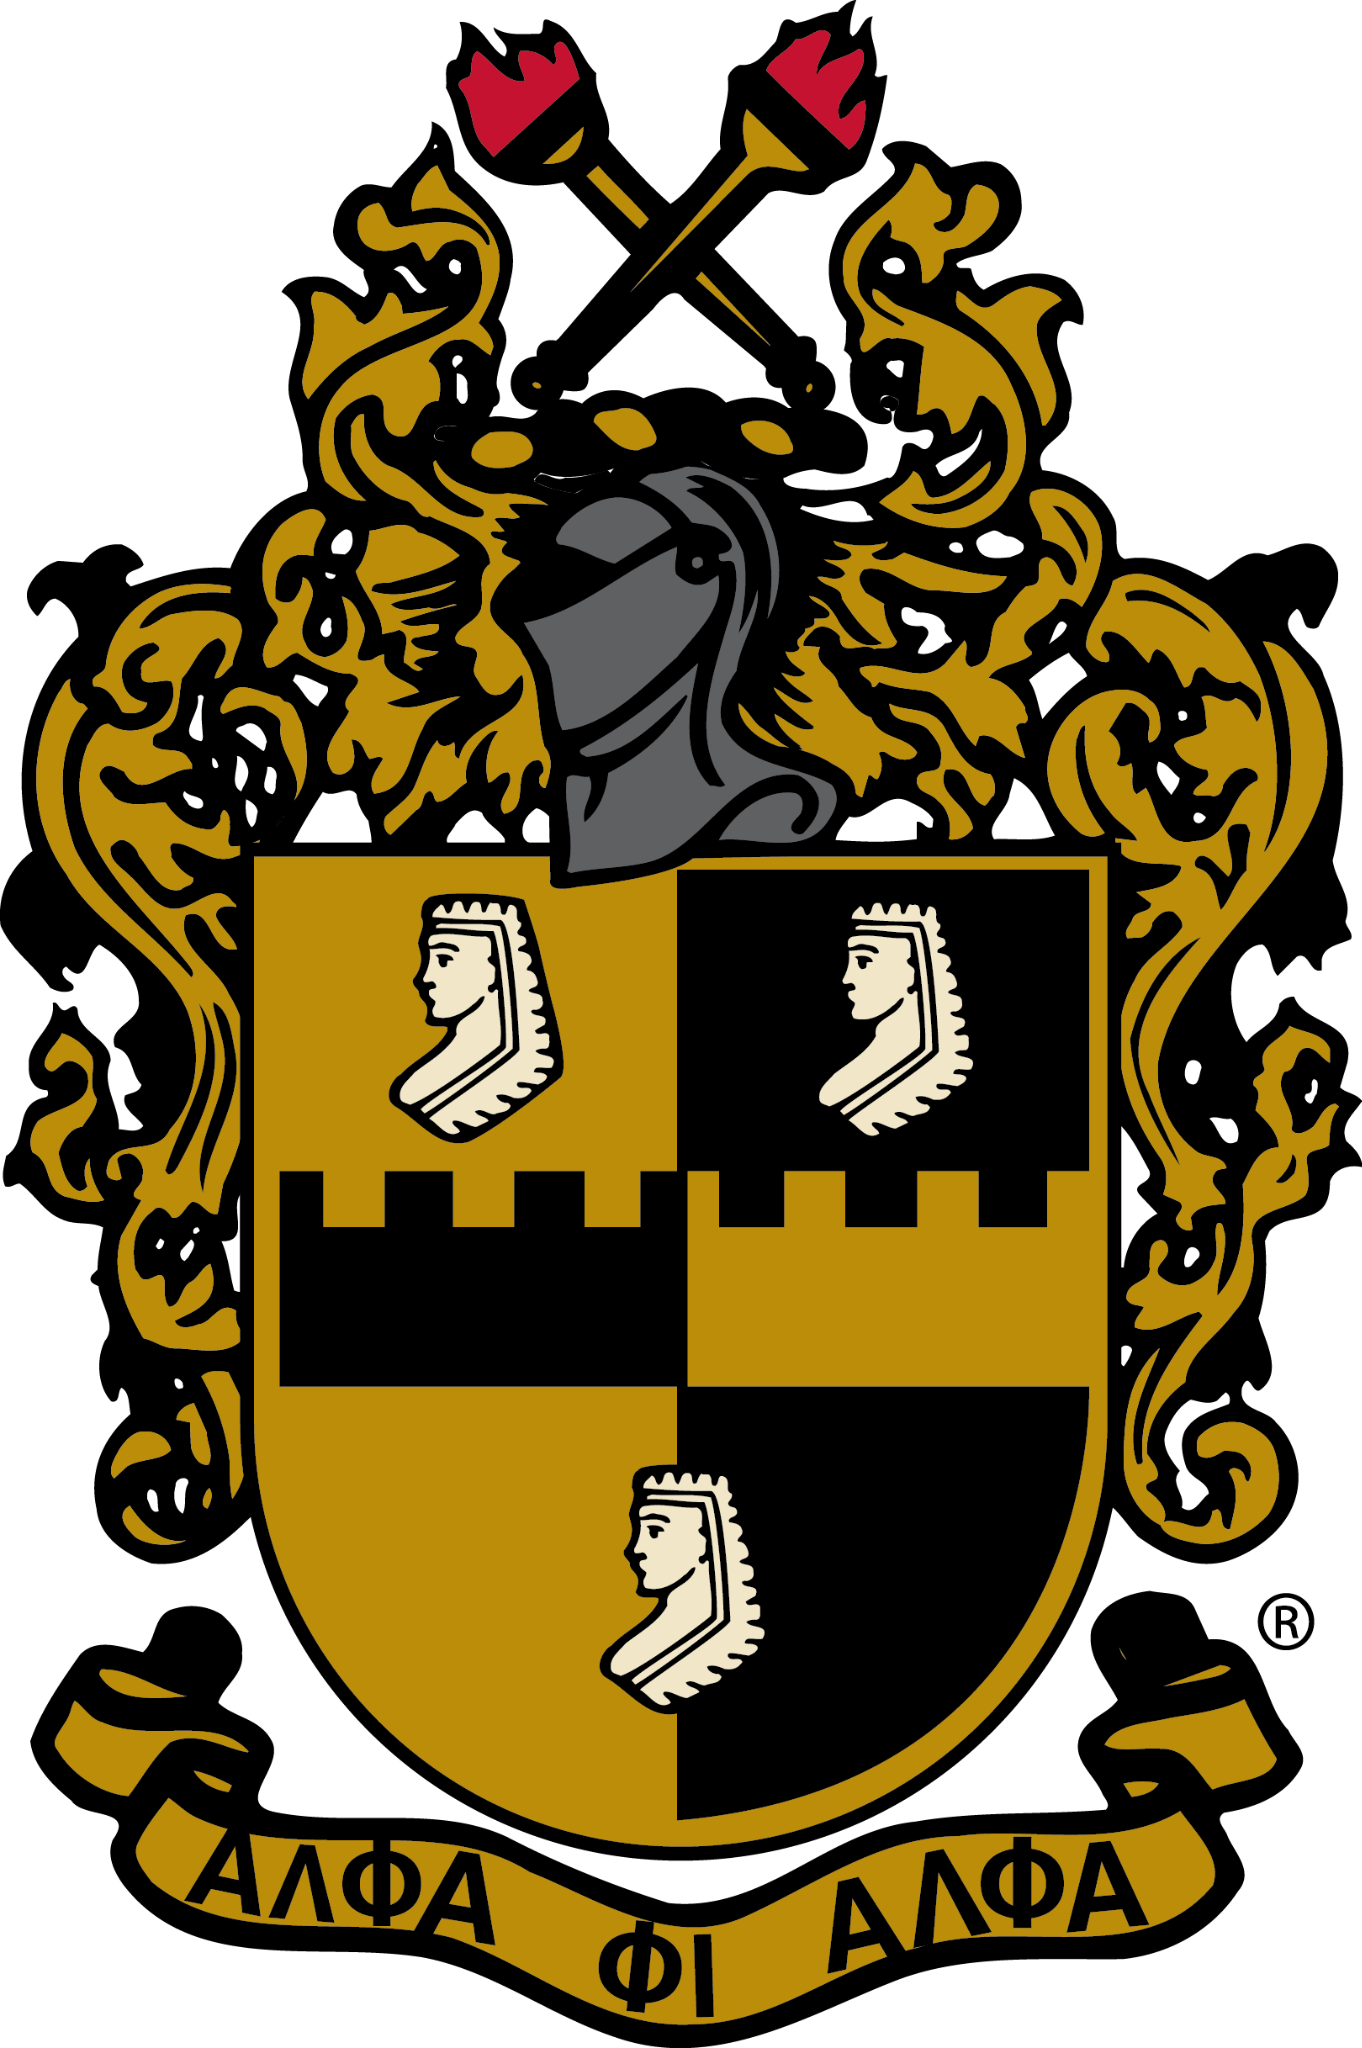 Alpha Phi Alpha crest showing colors of black and gold